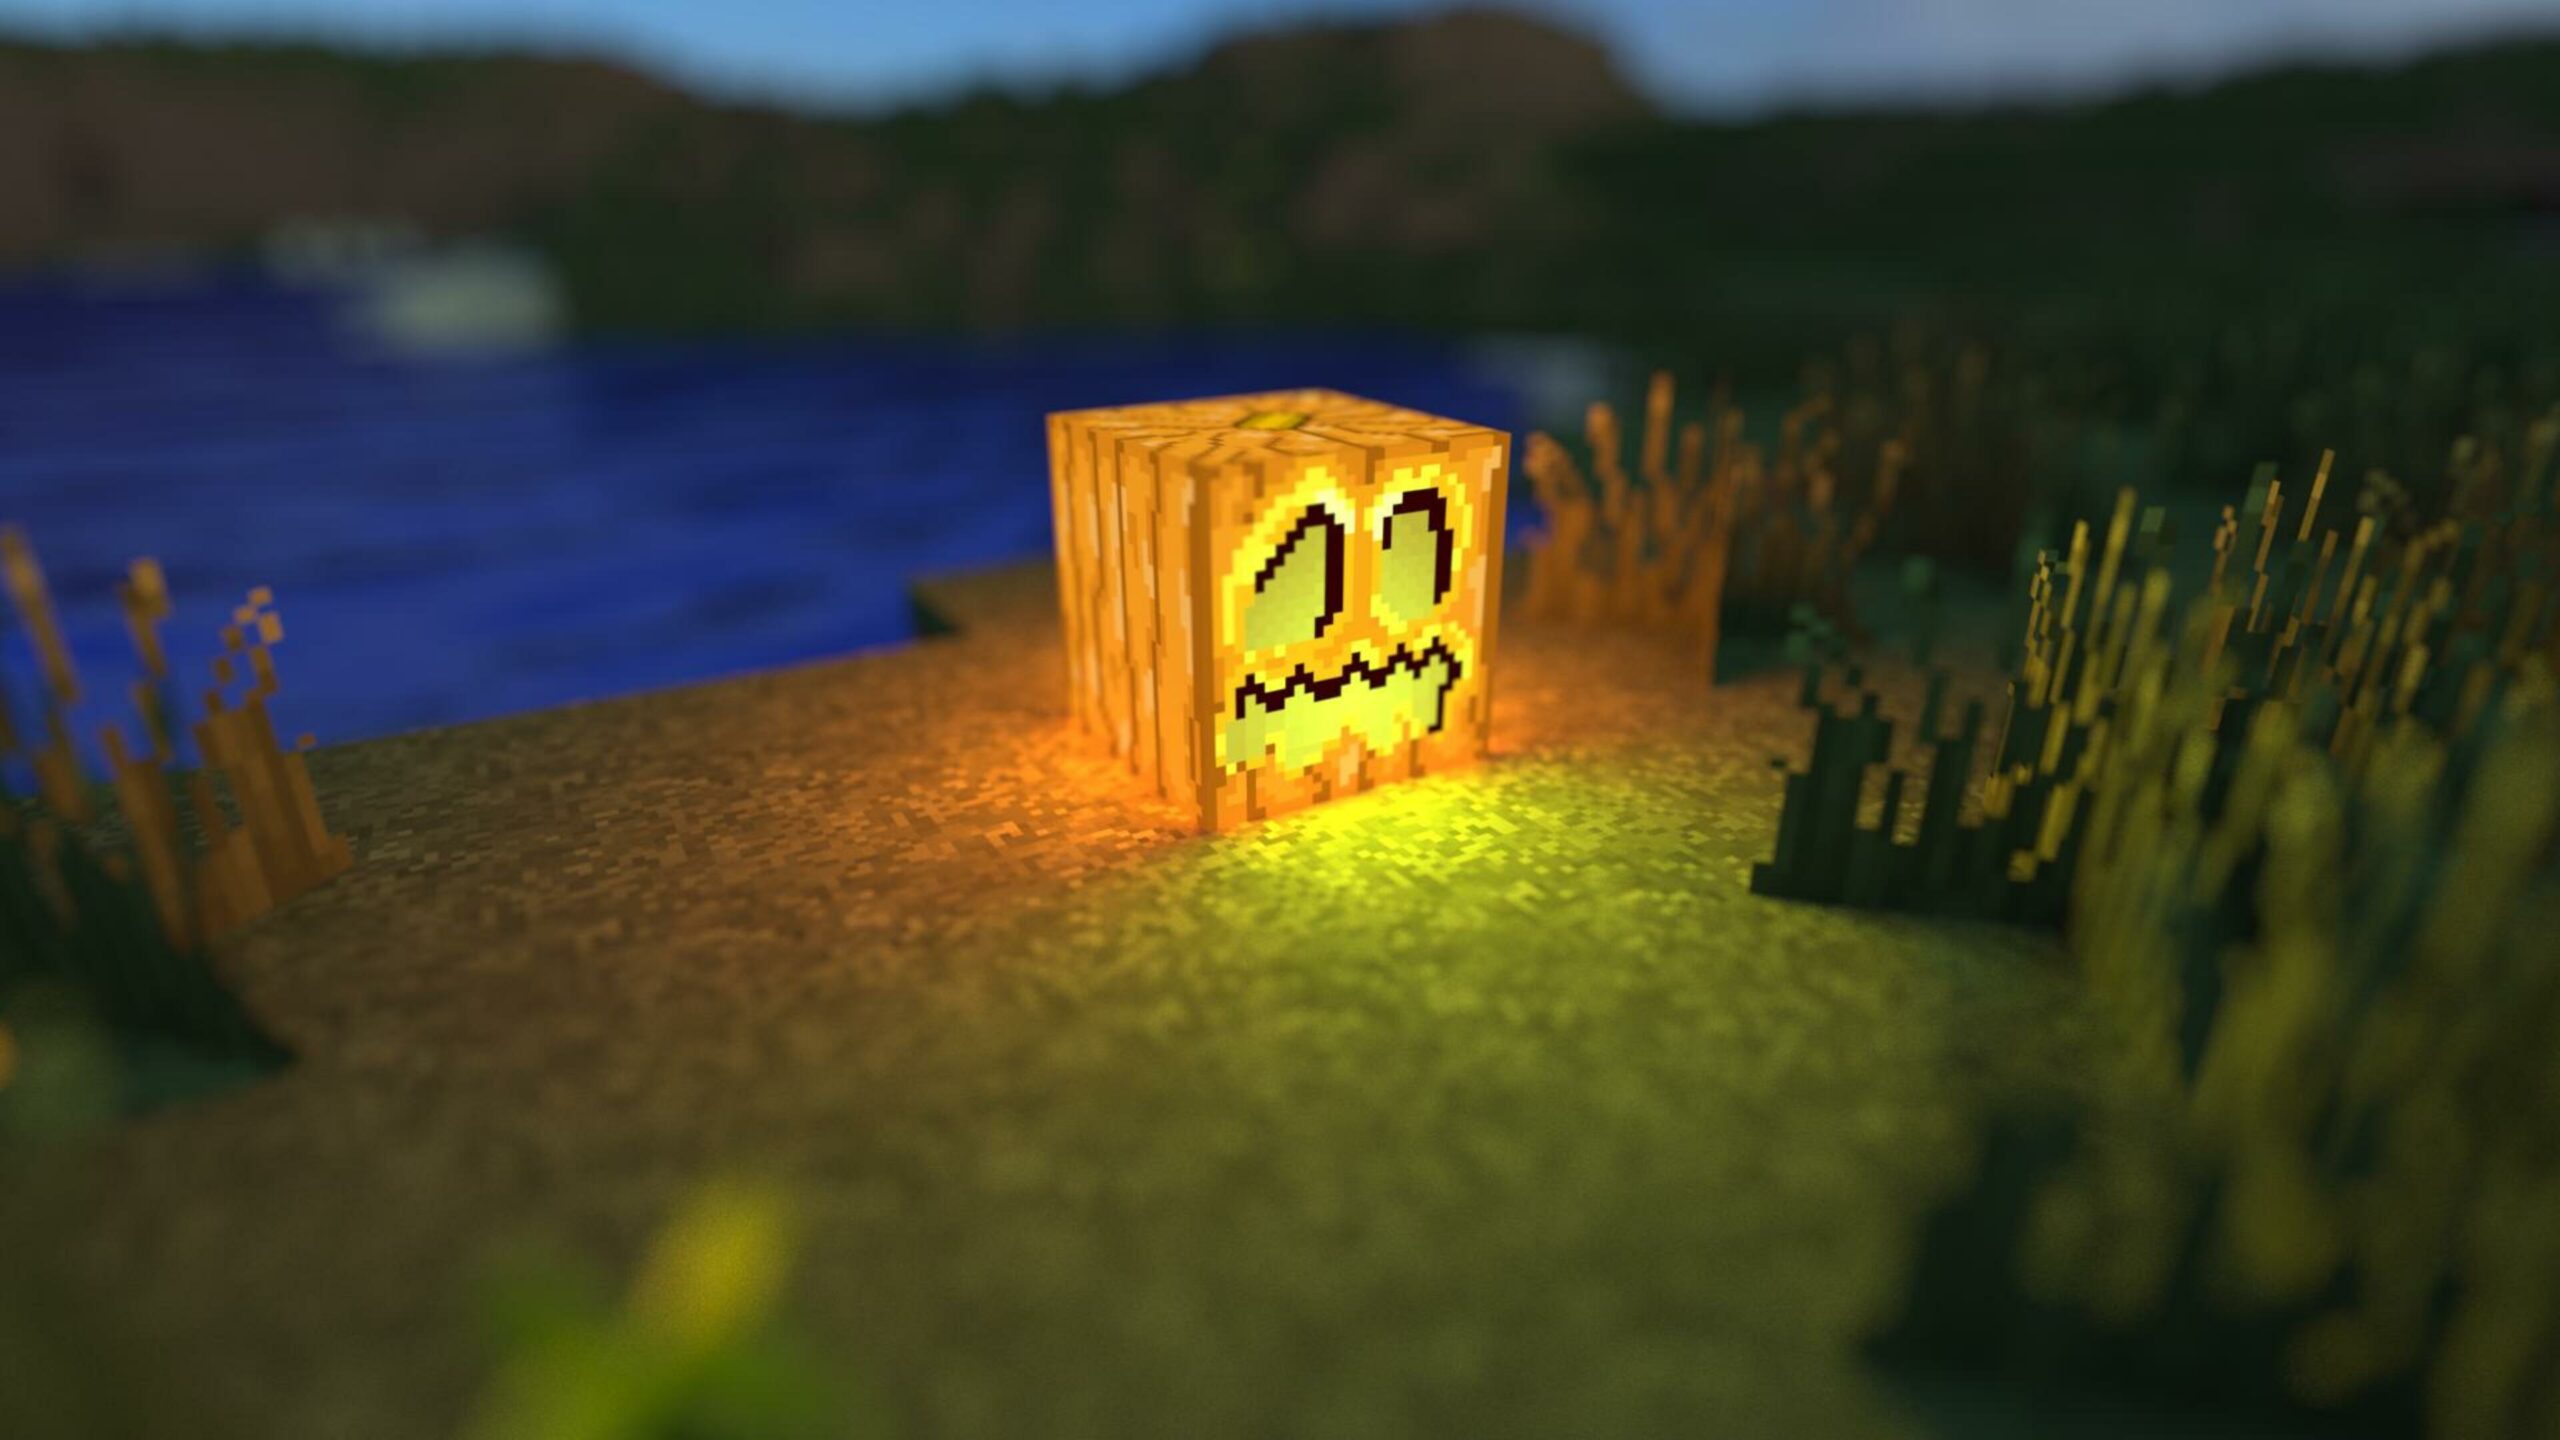 How To Make Jack O'lantern In Minecraft